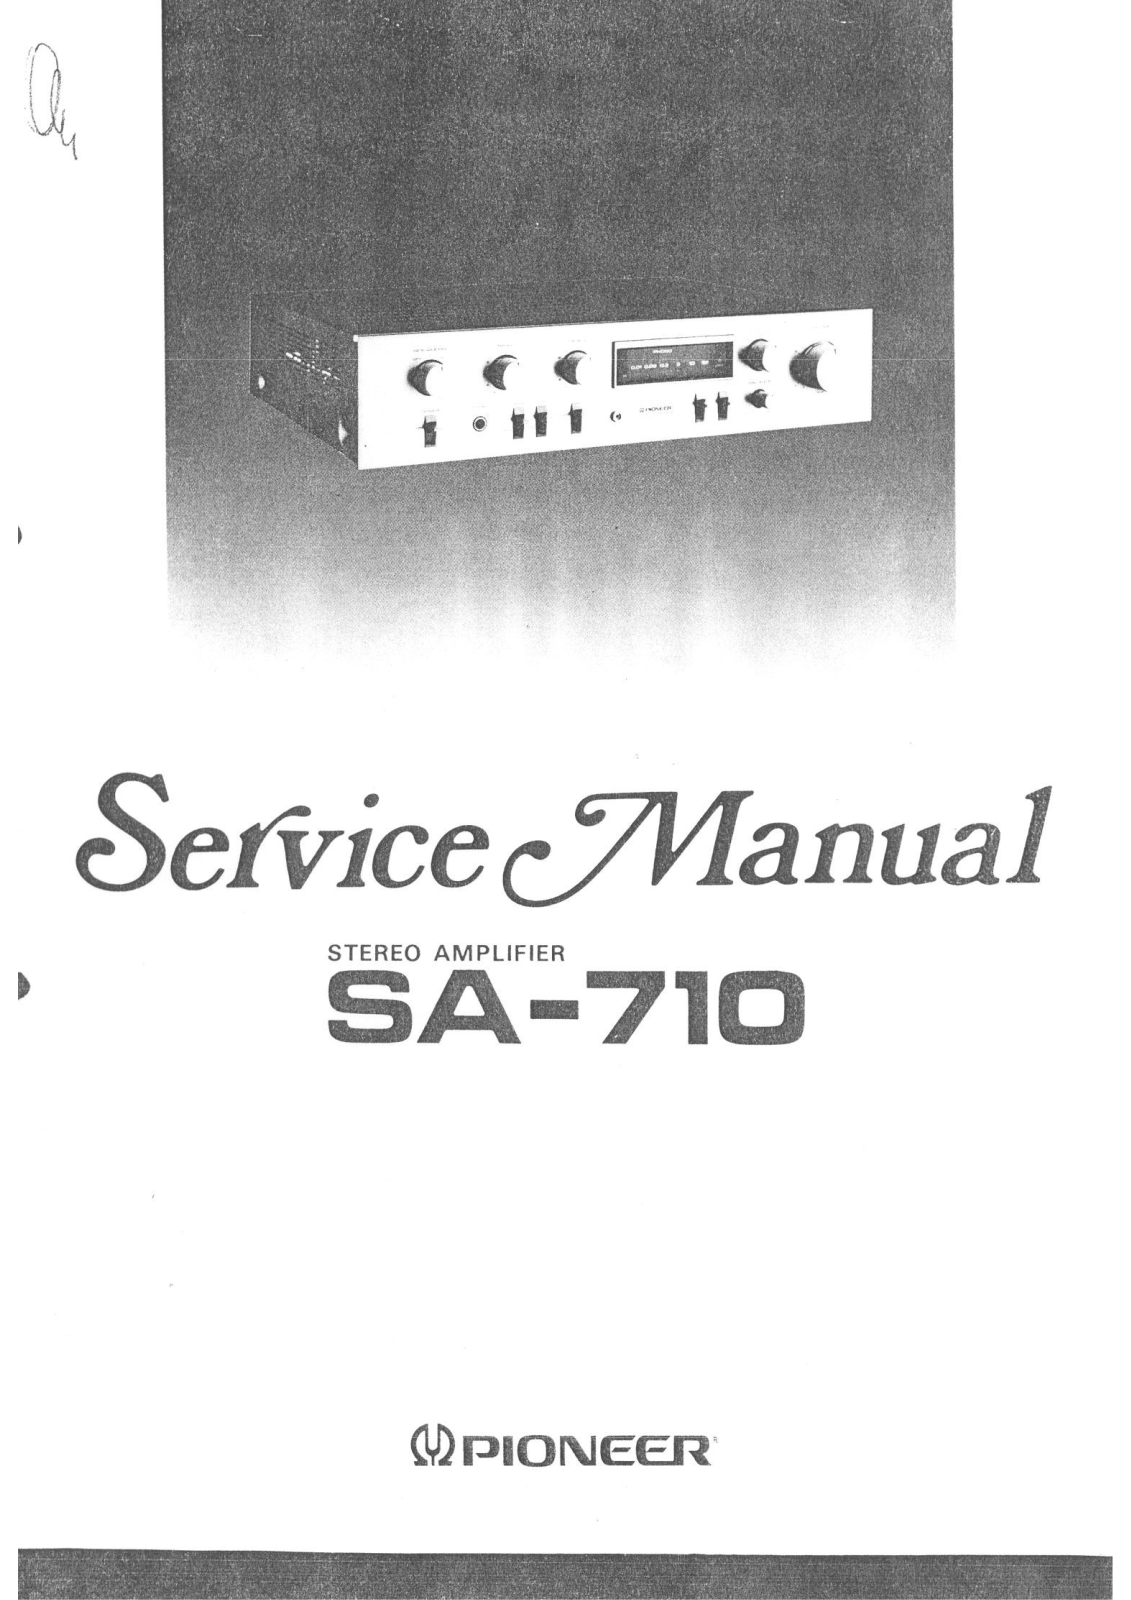 Pioneer SA-710 Service Manual